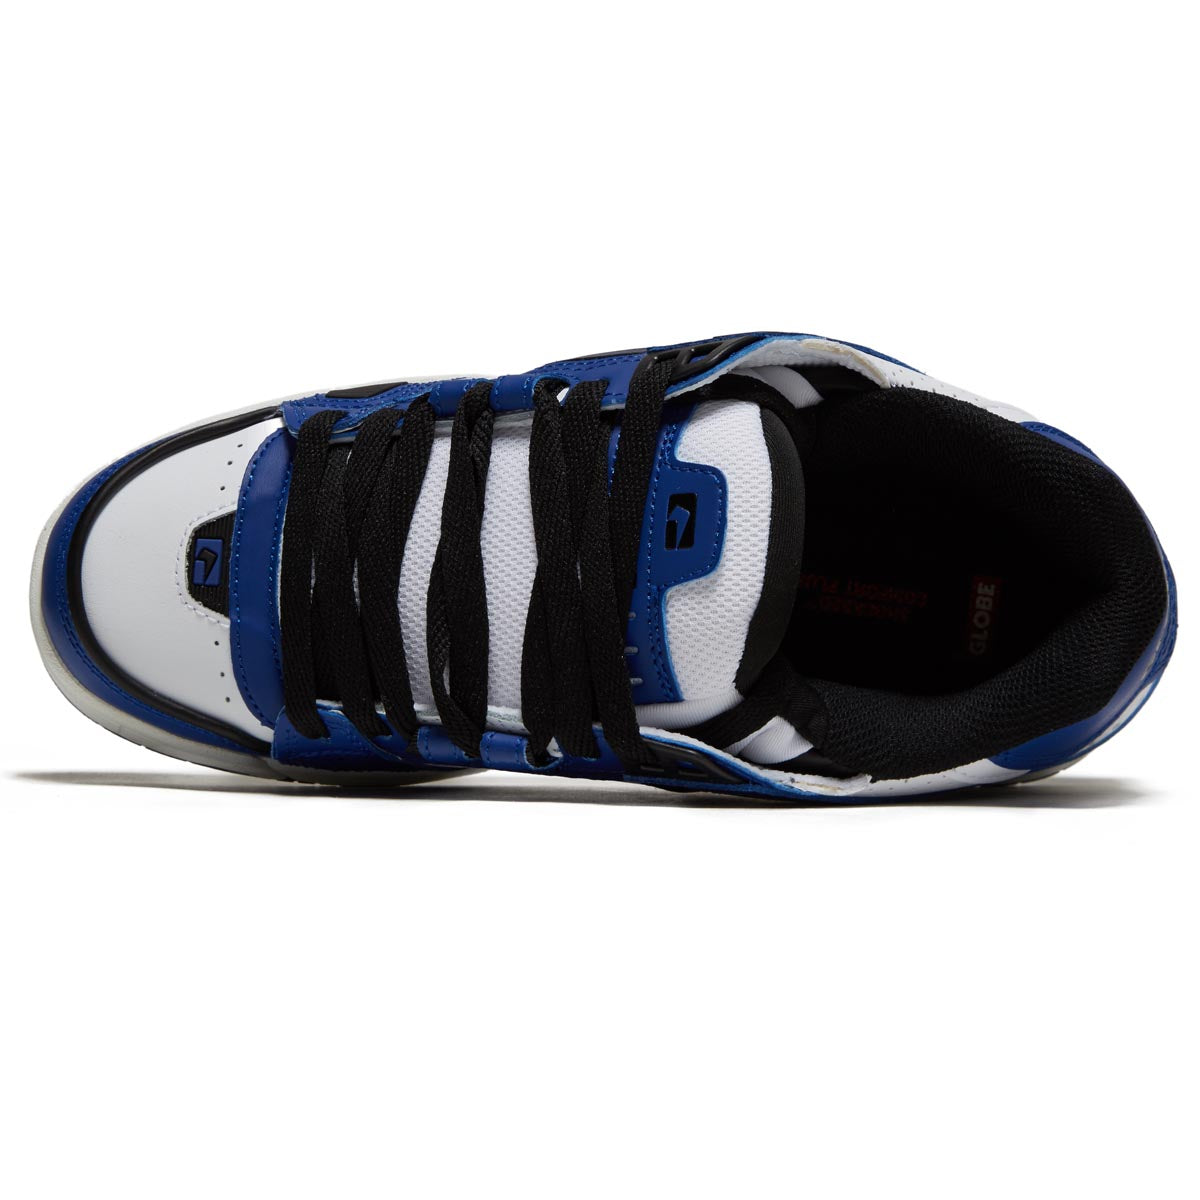 Globe Sabre Shoes - Cobalt/Black/White image 3